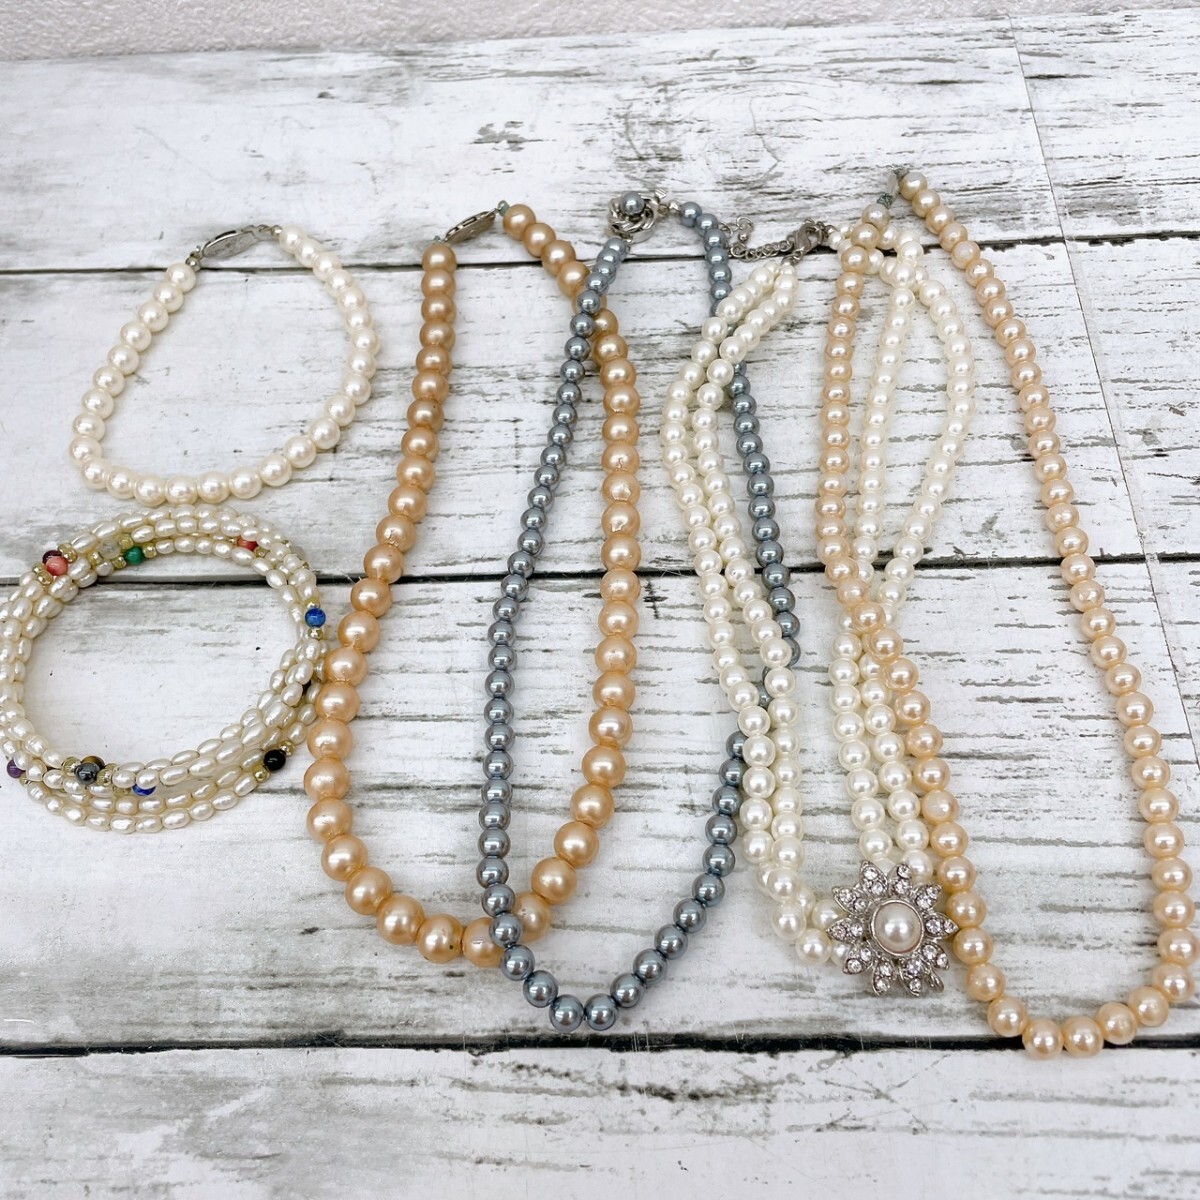 [K] pearl necklace accessory bracele pearl imite-shon natural stone plating . summarize large amount details unknown [3287-5025]